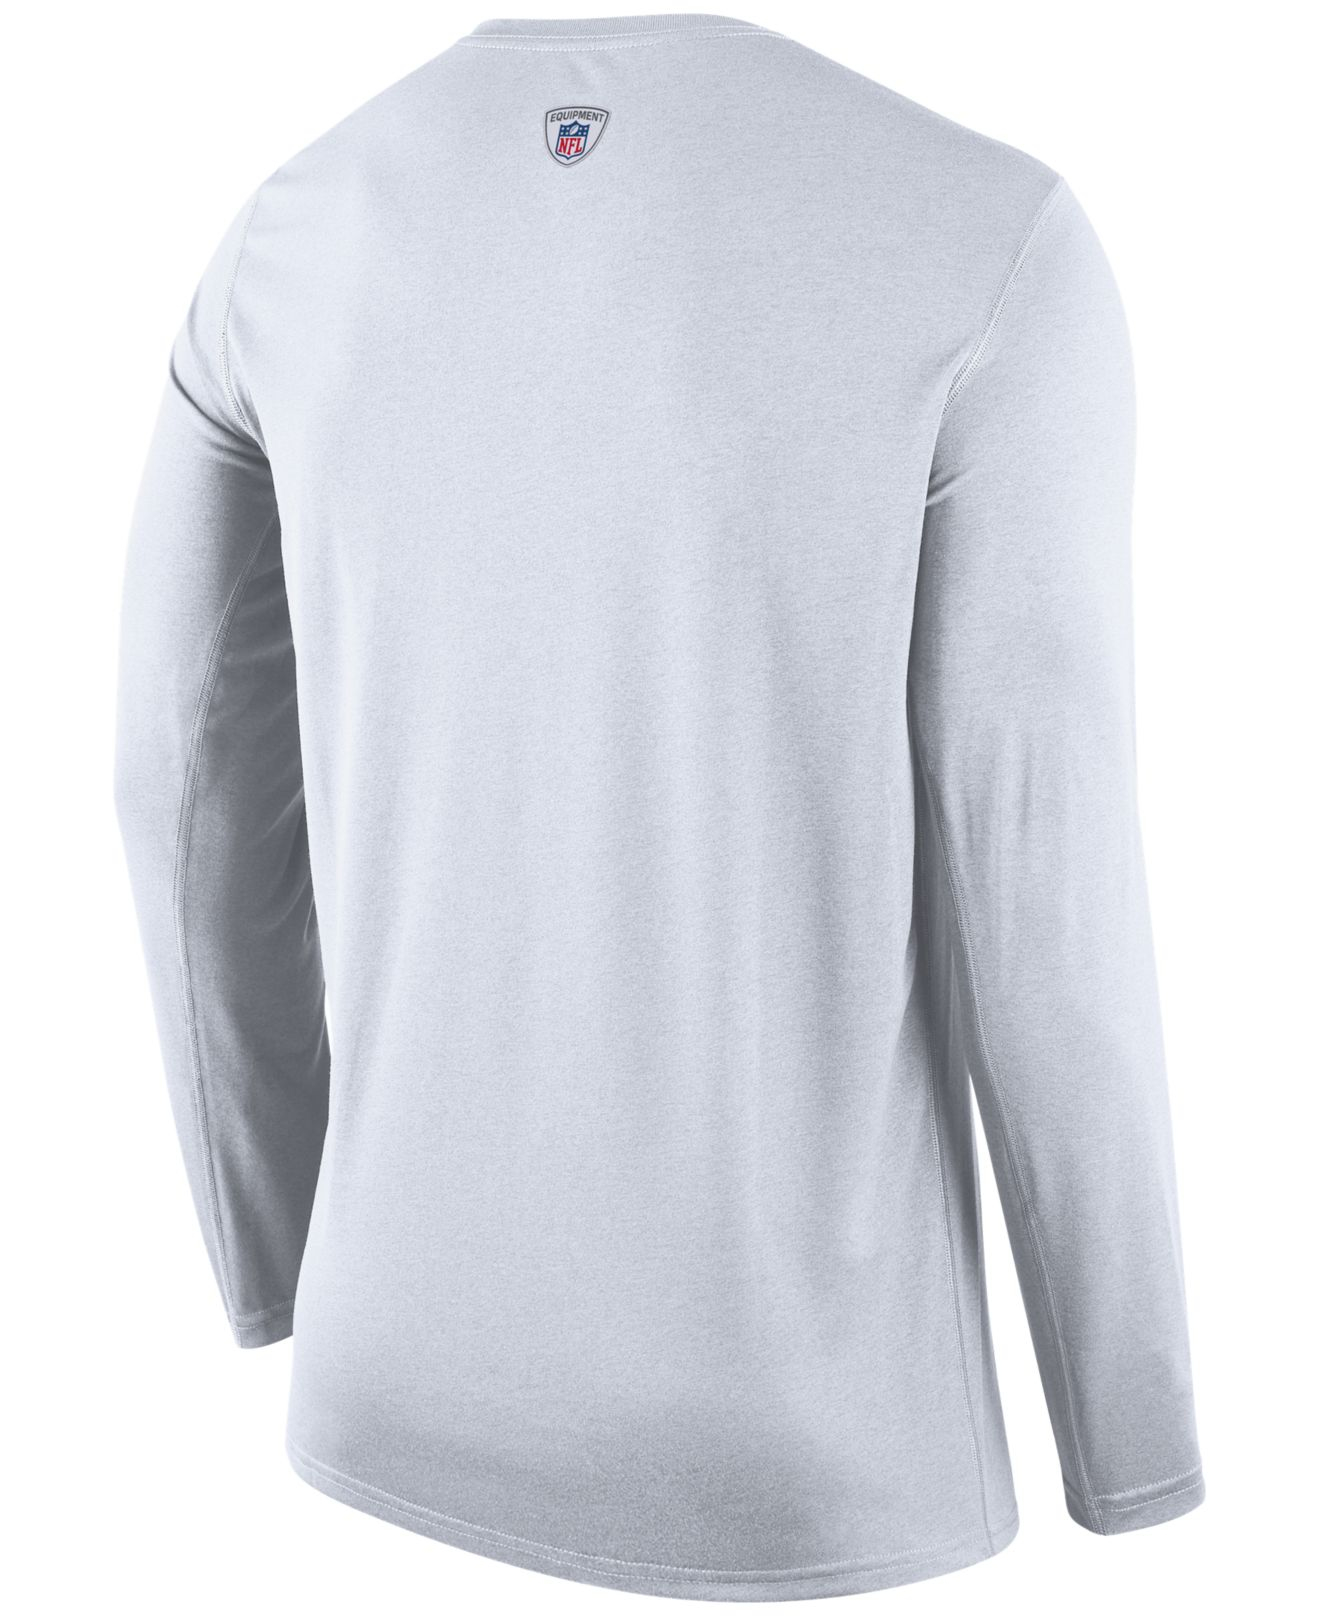 Fade Dolphin NEW Authentic Calcutta T-Shirt Sz XL Long Sleeve- 514731 White 